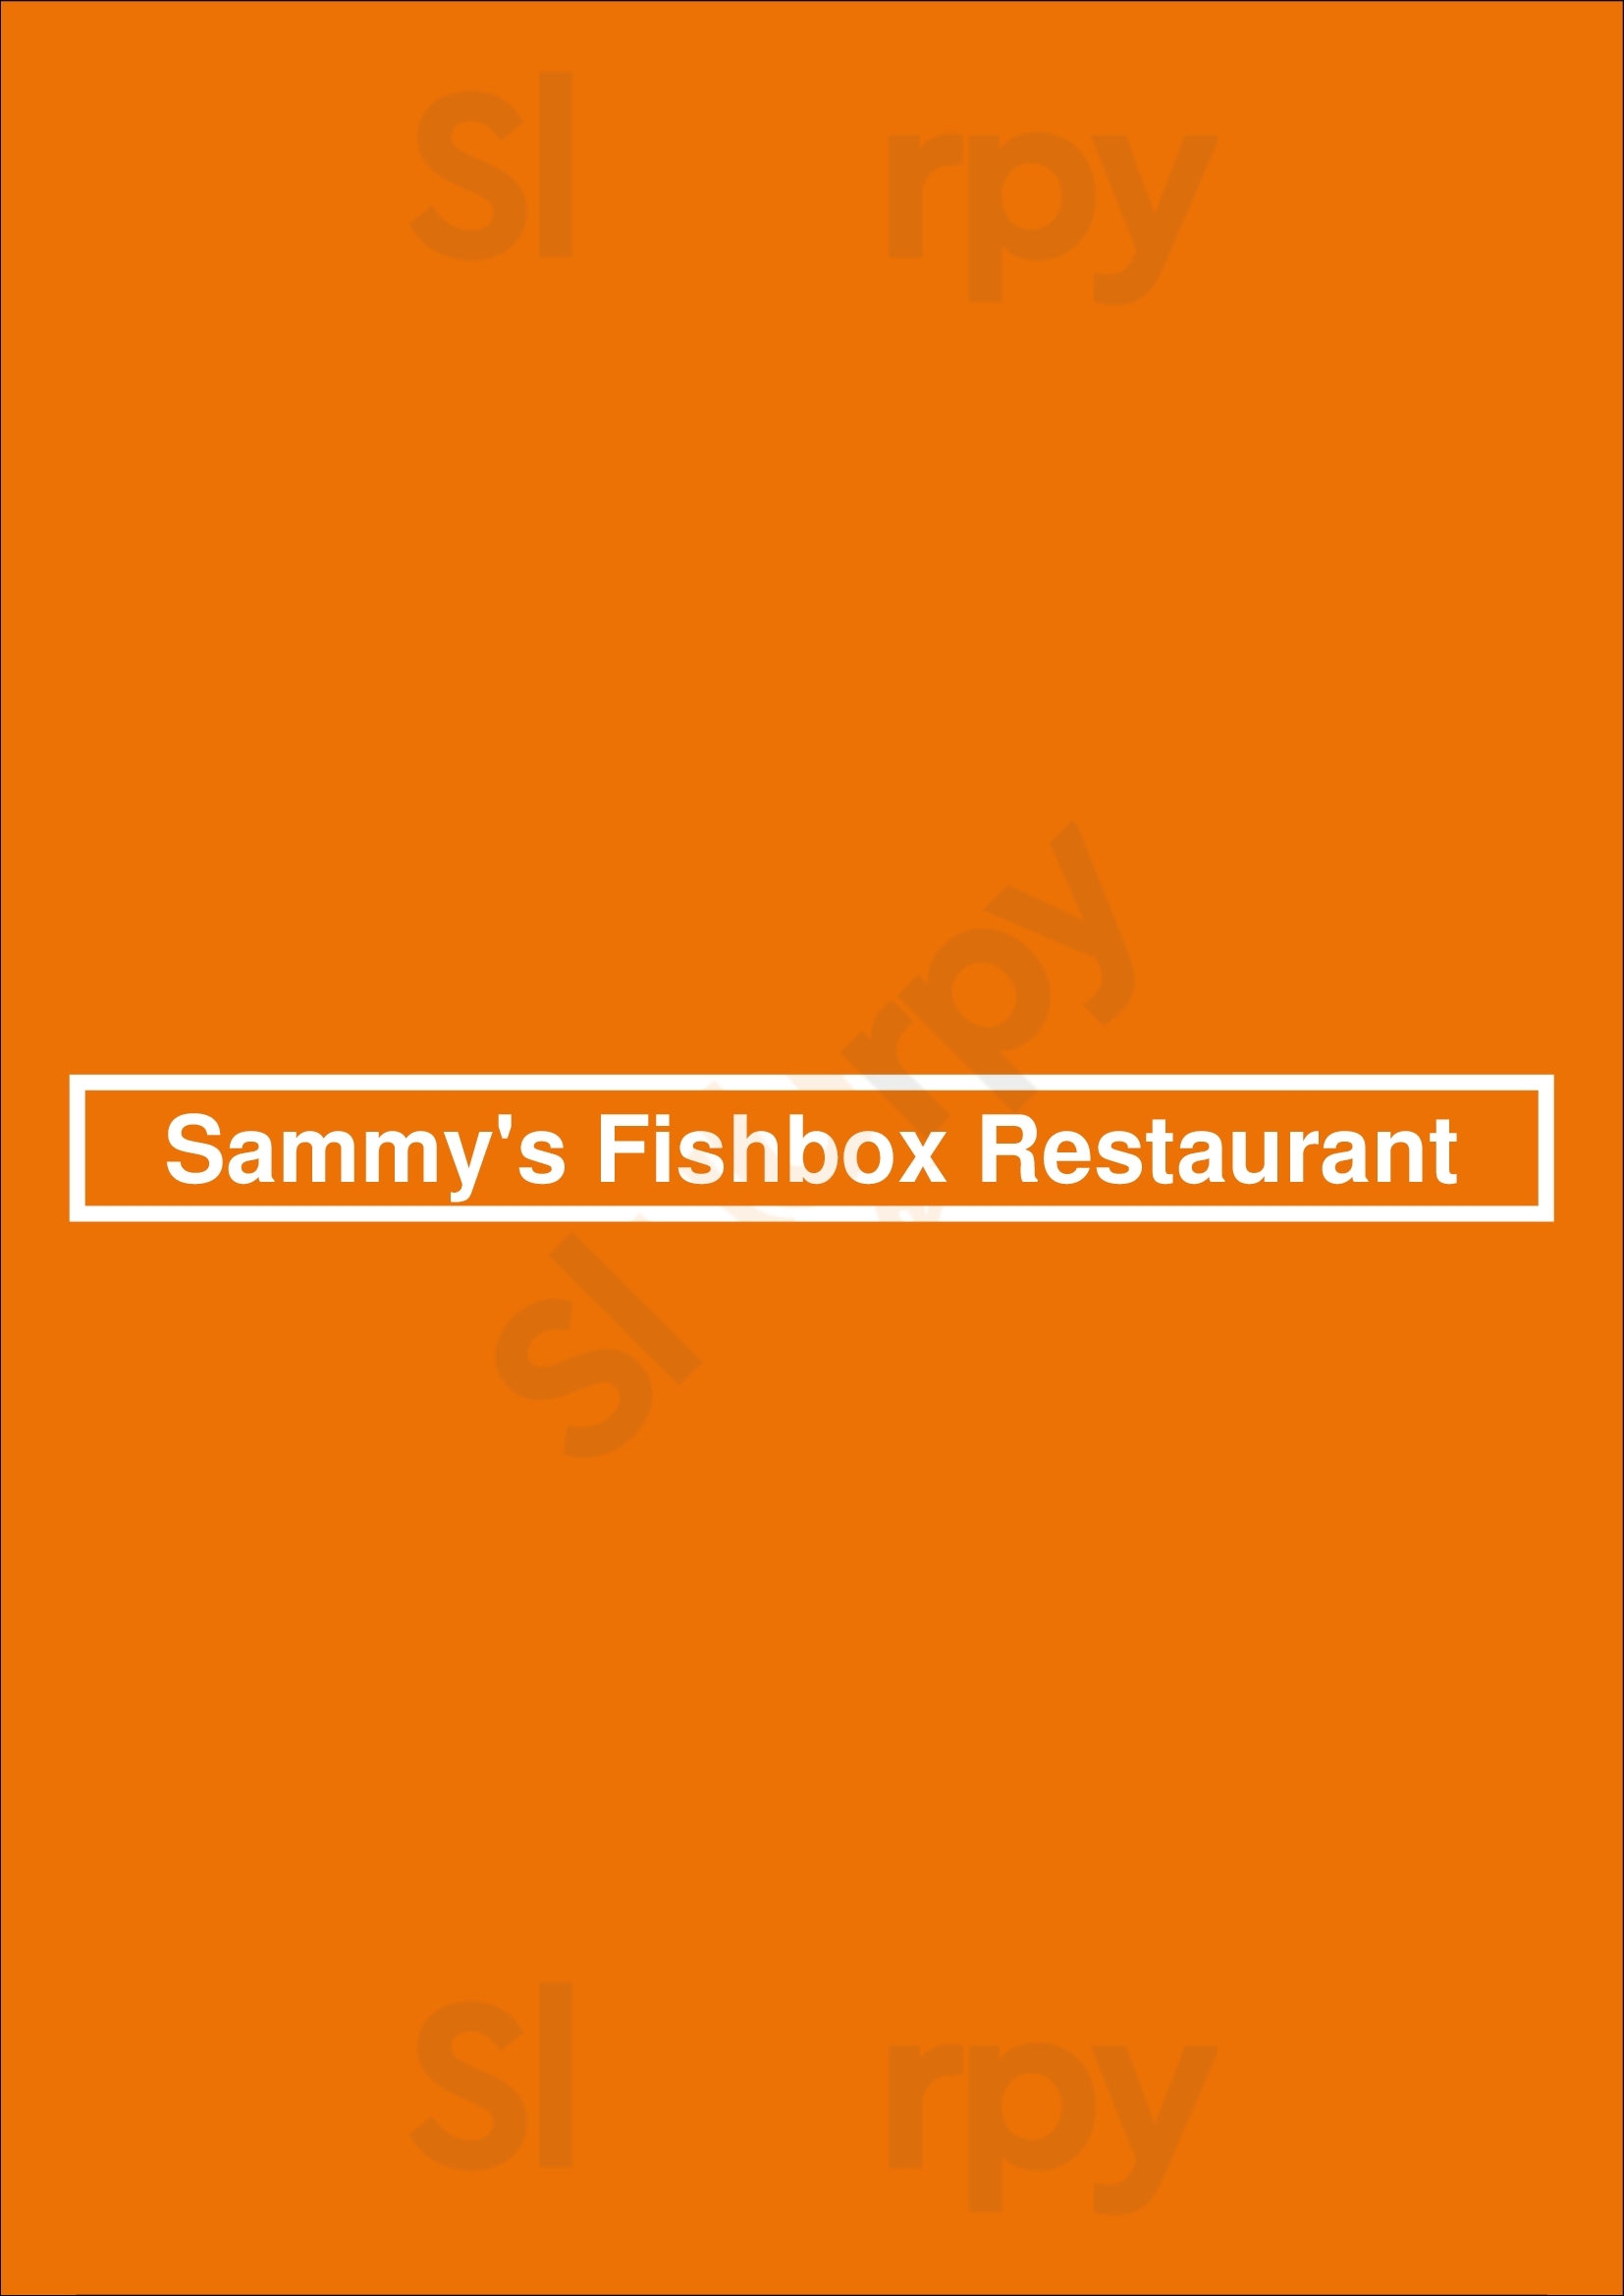 Sammy's Fishbox Restaurant Bronx Menu - 1